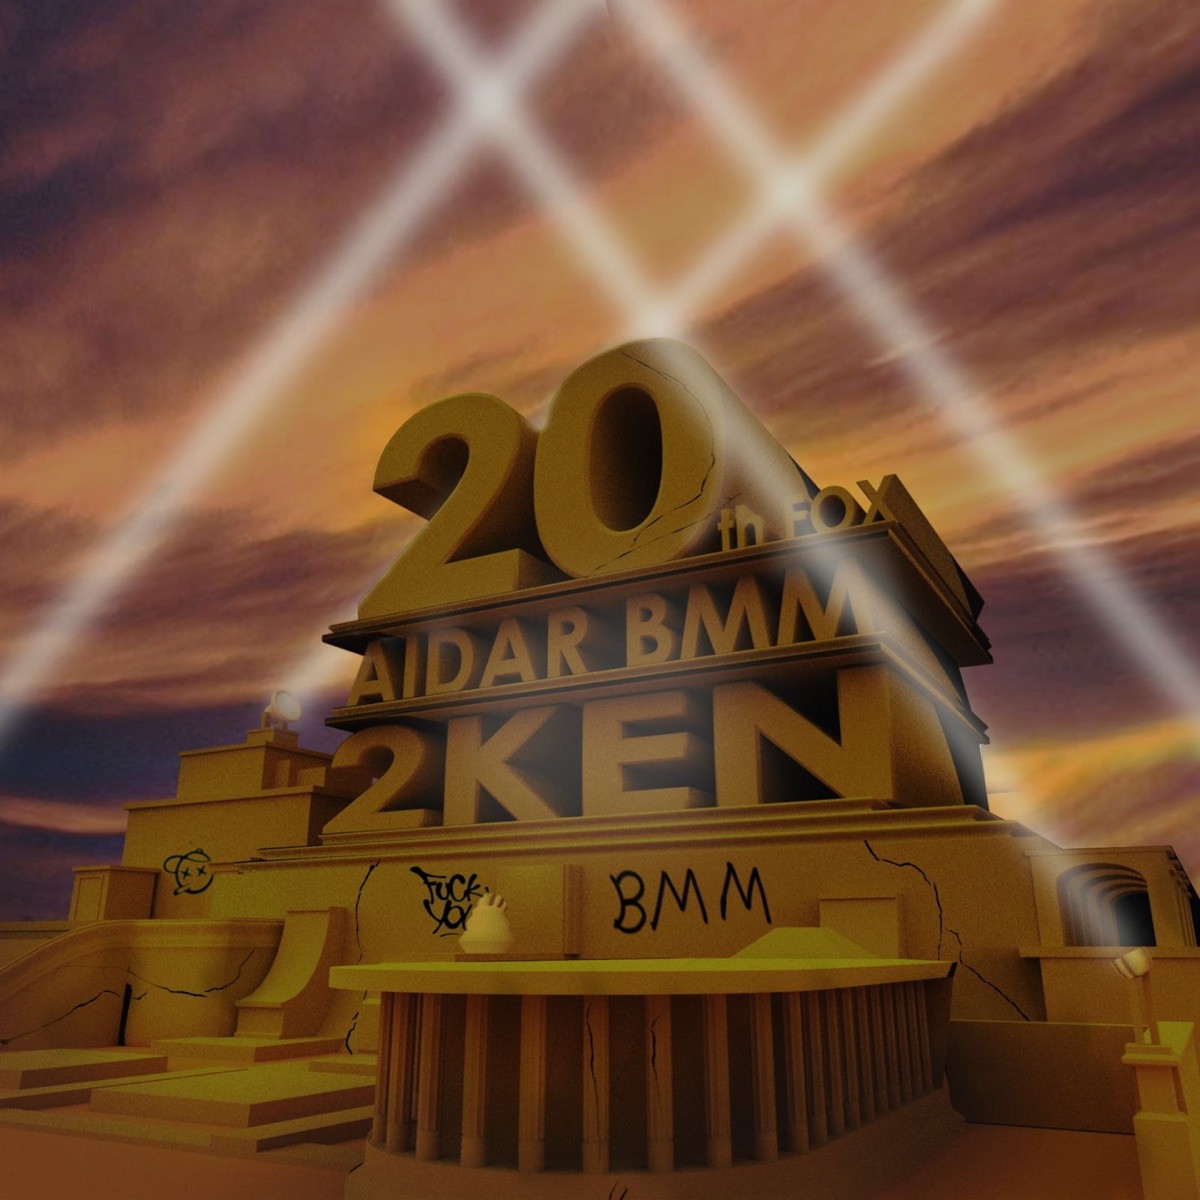 20th FOX - Single - Album by 2ken & Aidar BMM - Apple Music